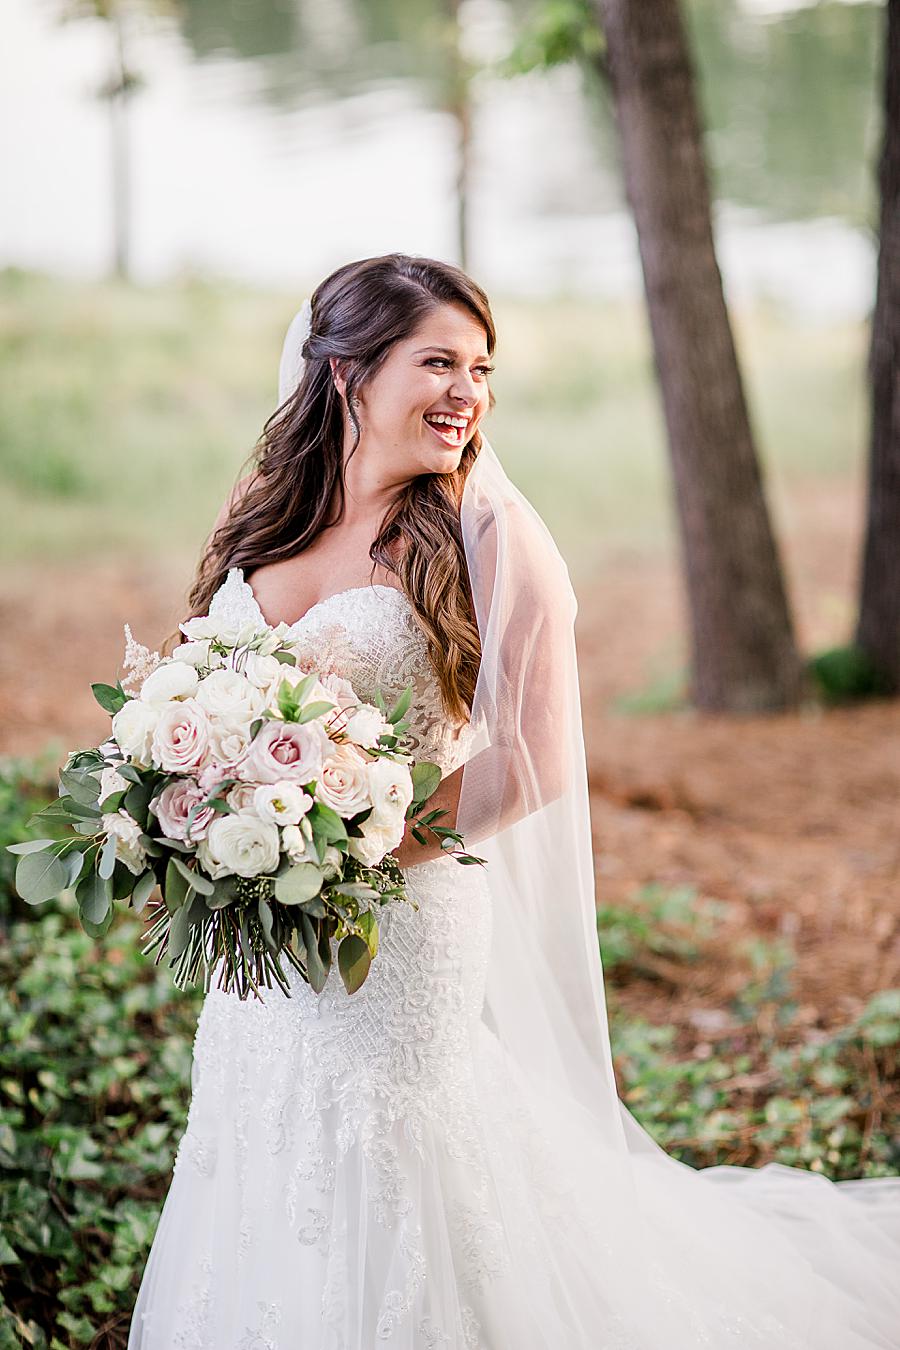 Happy bride at this WindRiver Bridal Portraits by Knoxville Wedding Photographer, Amanda May Photos.